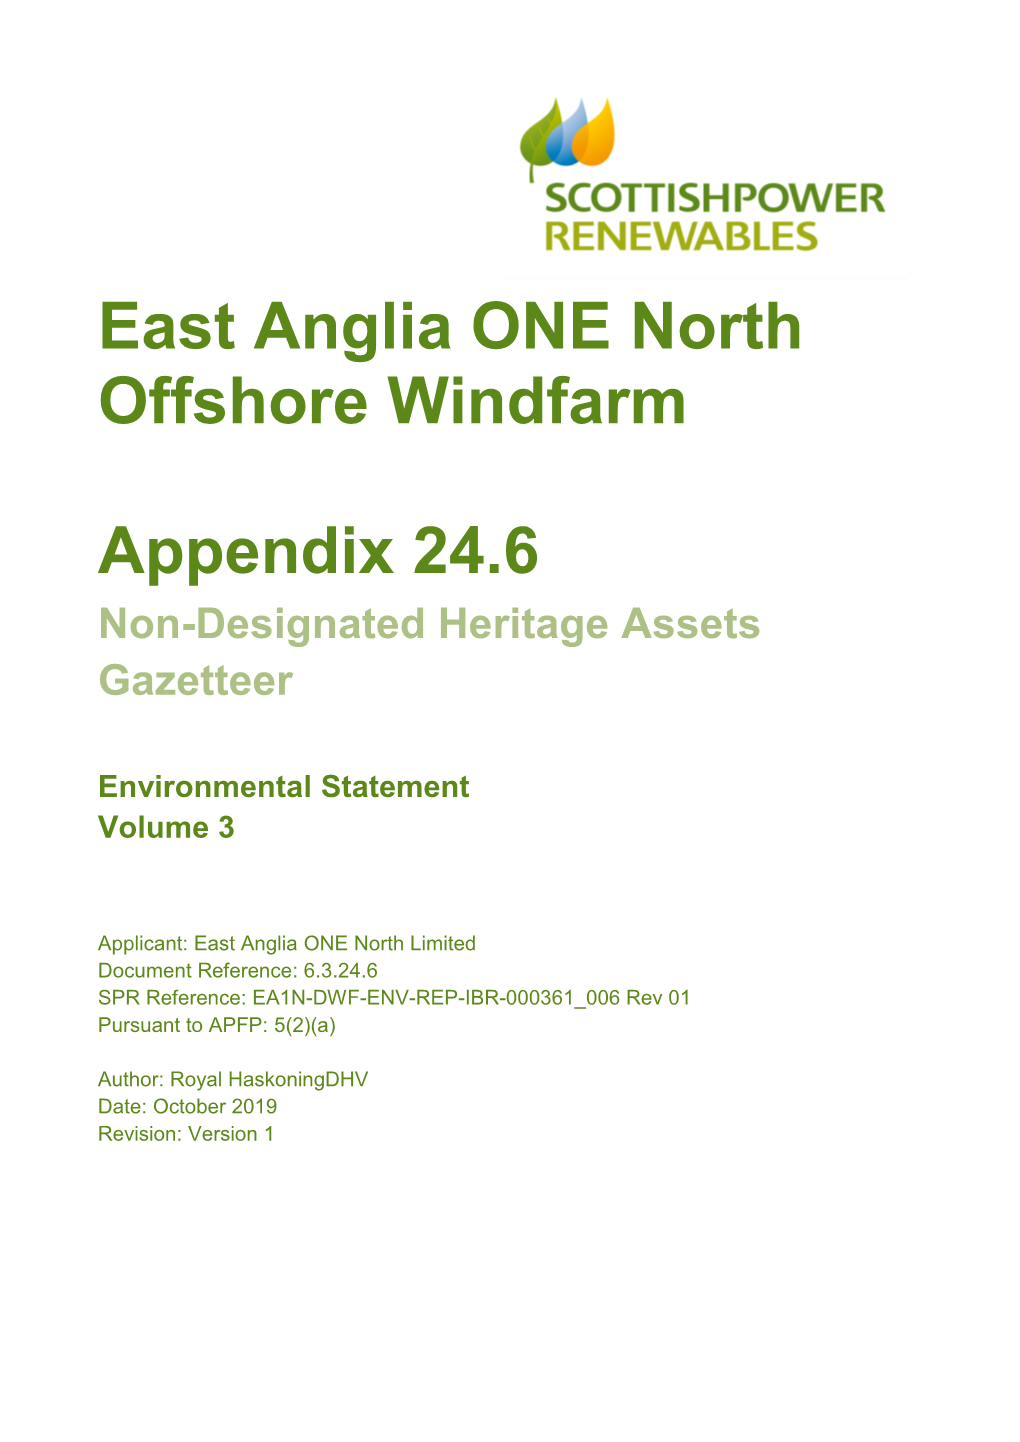 East Anglia ONE North Offshore Windfarm Appendix 24.6